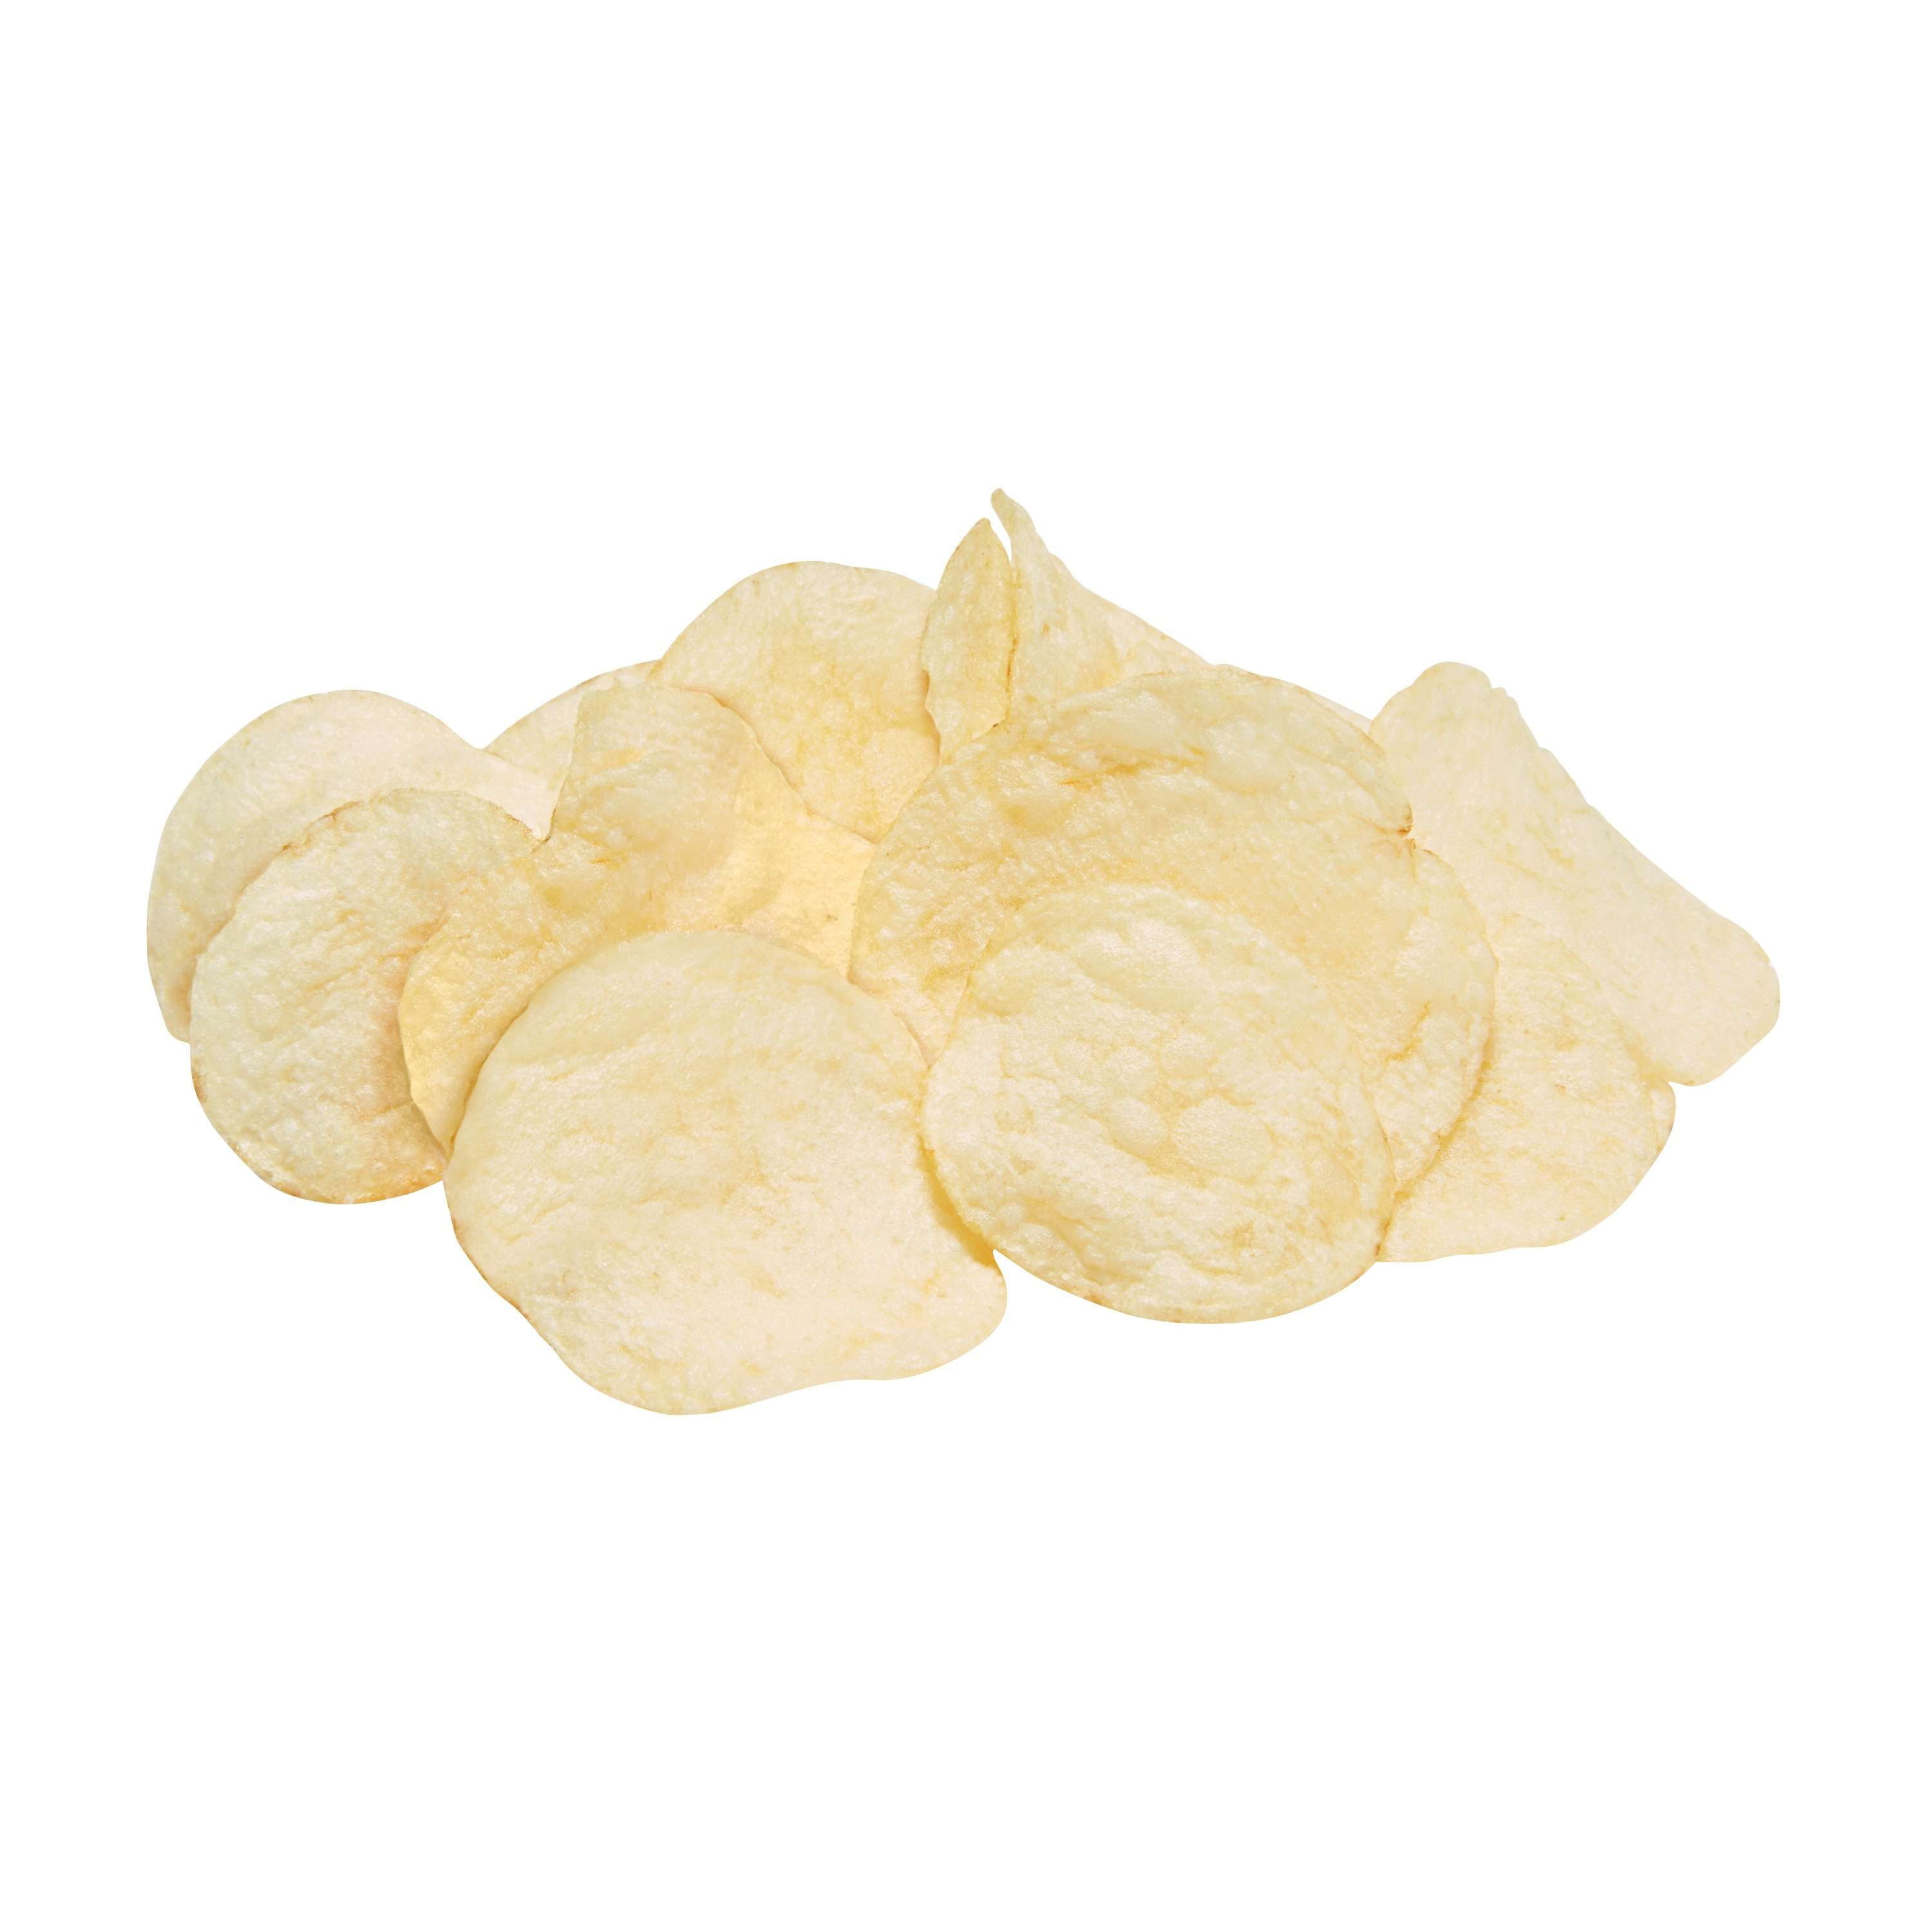 Lay's Classic Potato Chips (1 oz., 50 pk.) - Sam's Club